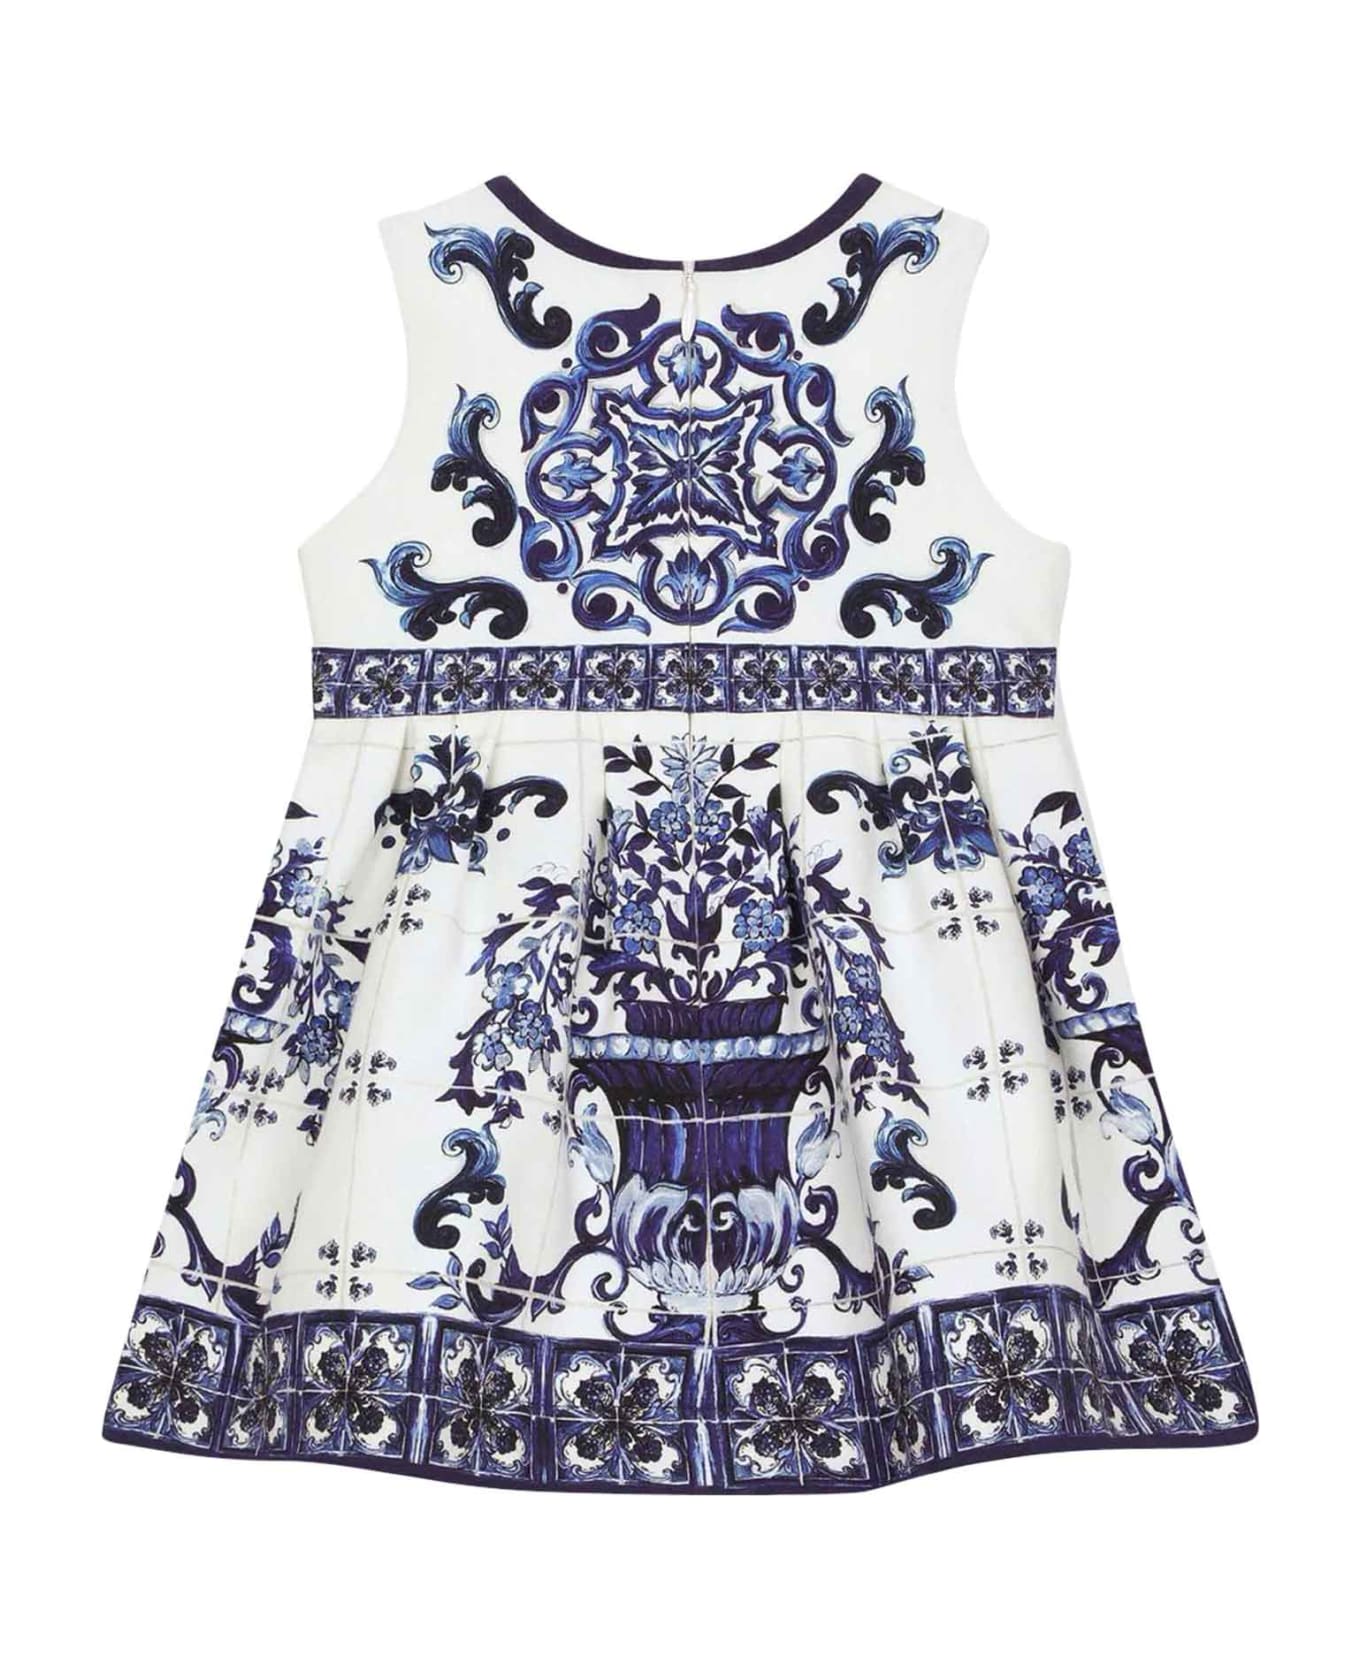 Dolce & Gabbana White / Blue Dress And Shorts Set Baby Girl - Bianco/blu